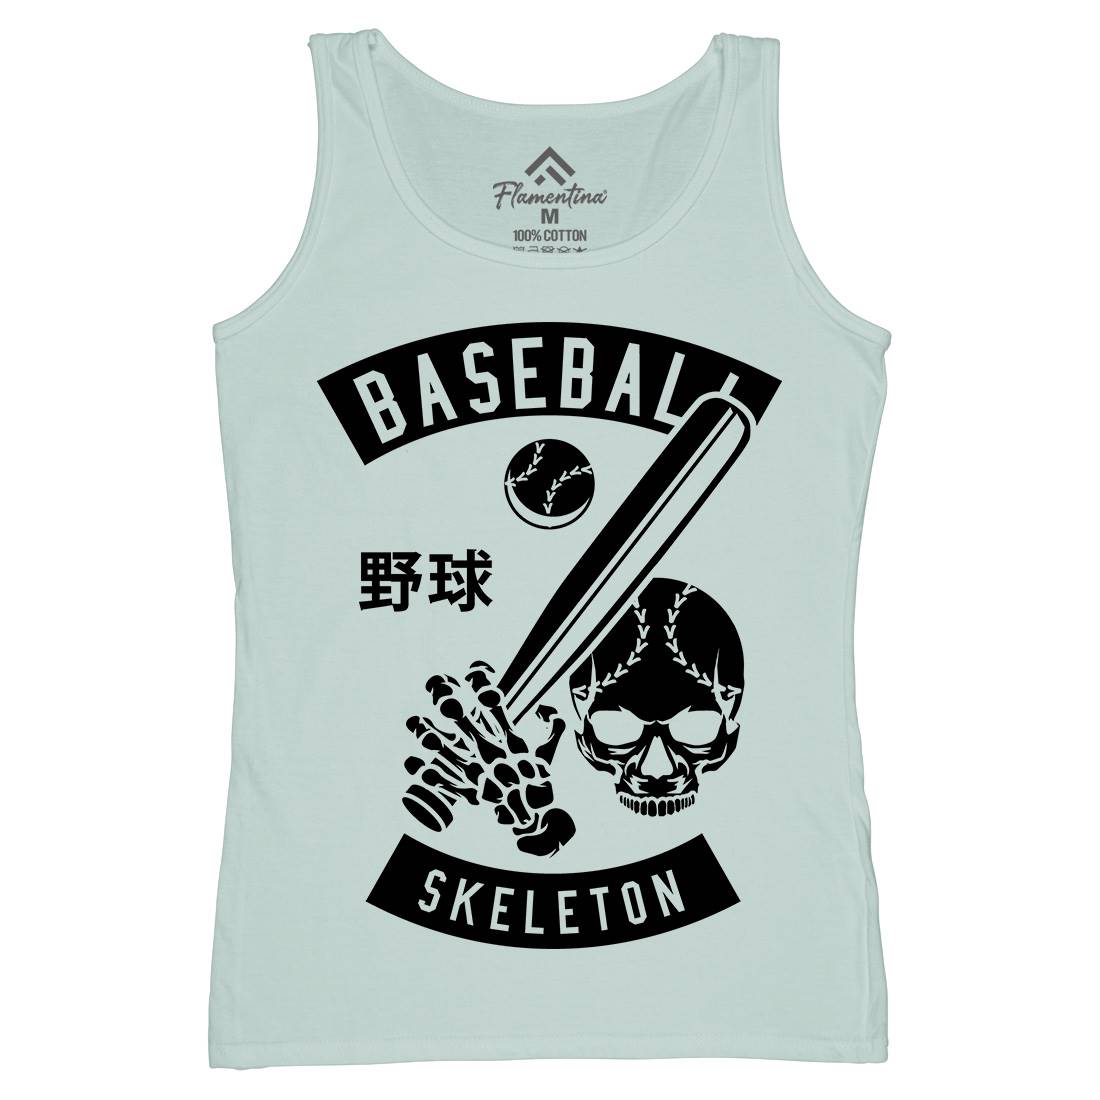 Baseball Skeleton Womens Organic Tank Top Vest Sport B489